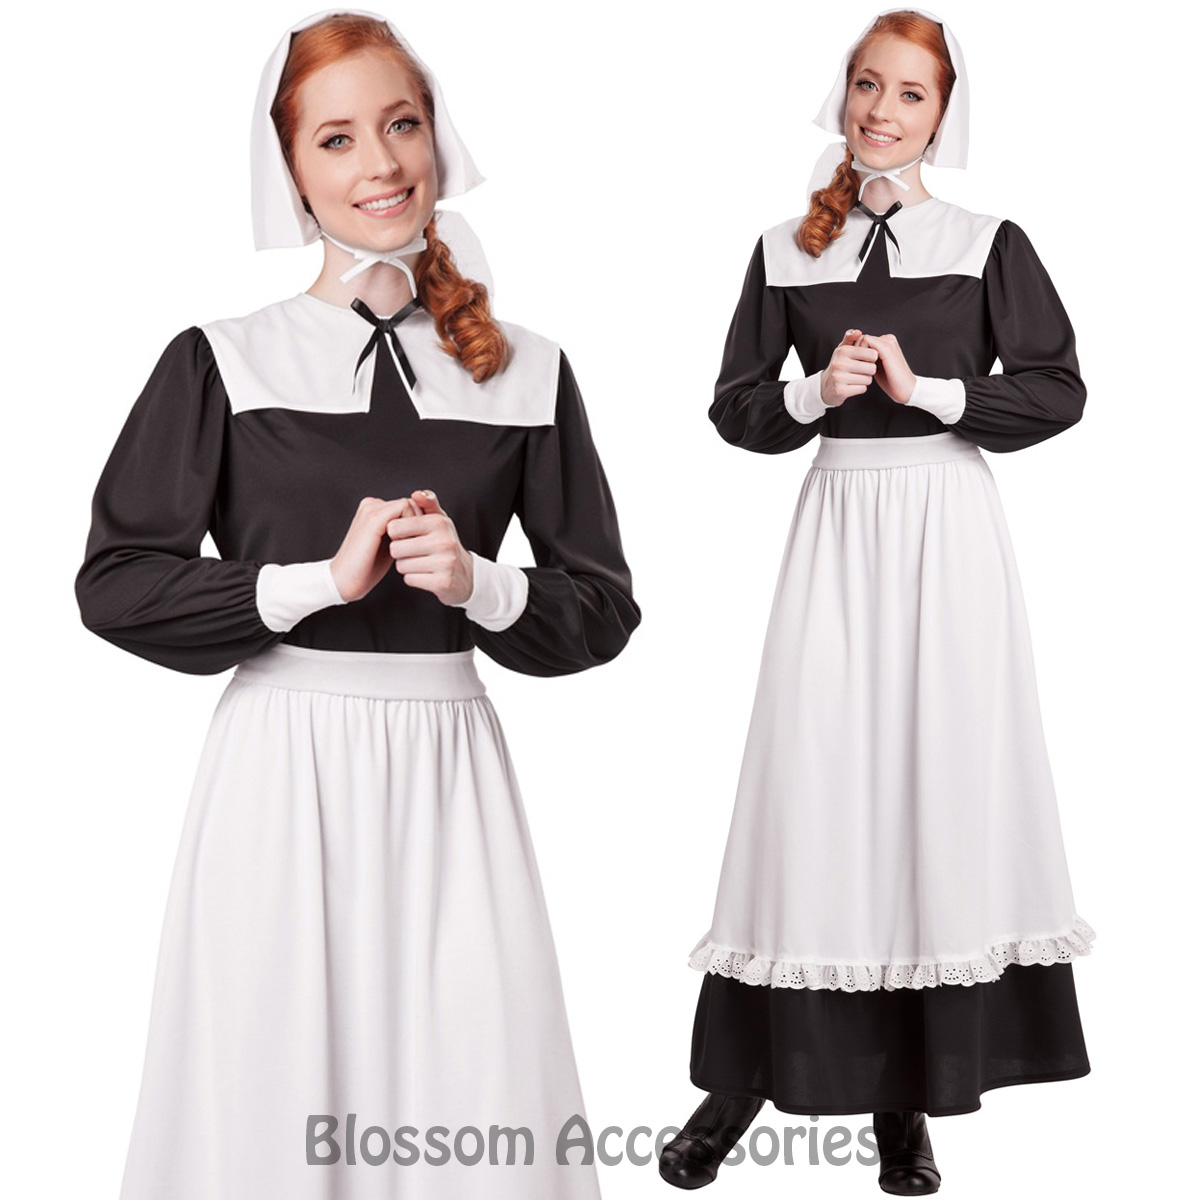 pilgrim-woman-costume.jpg